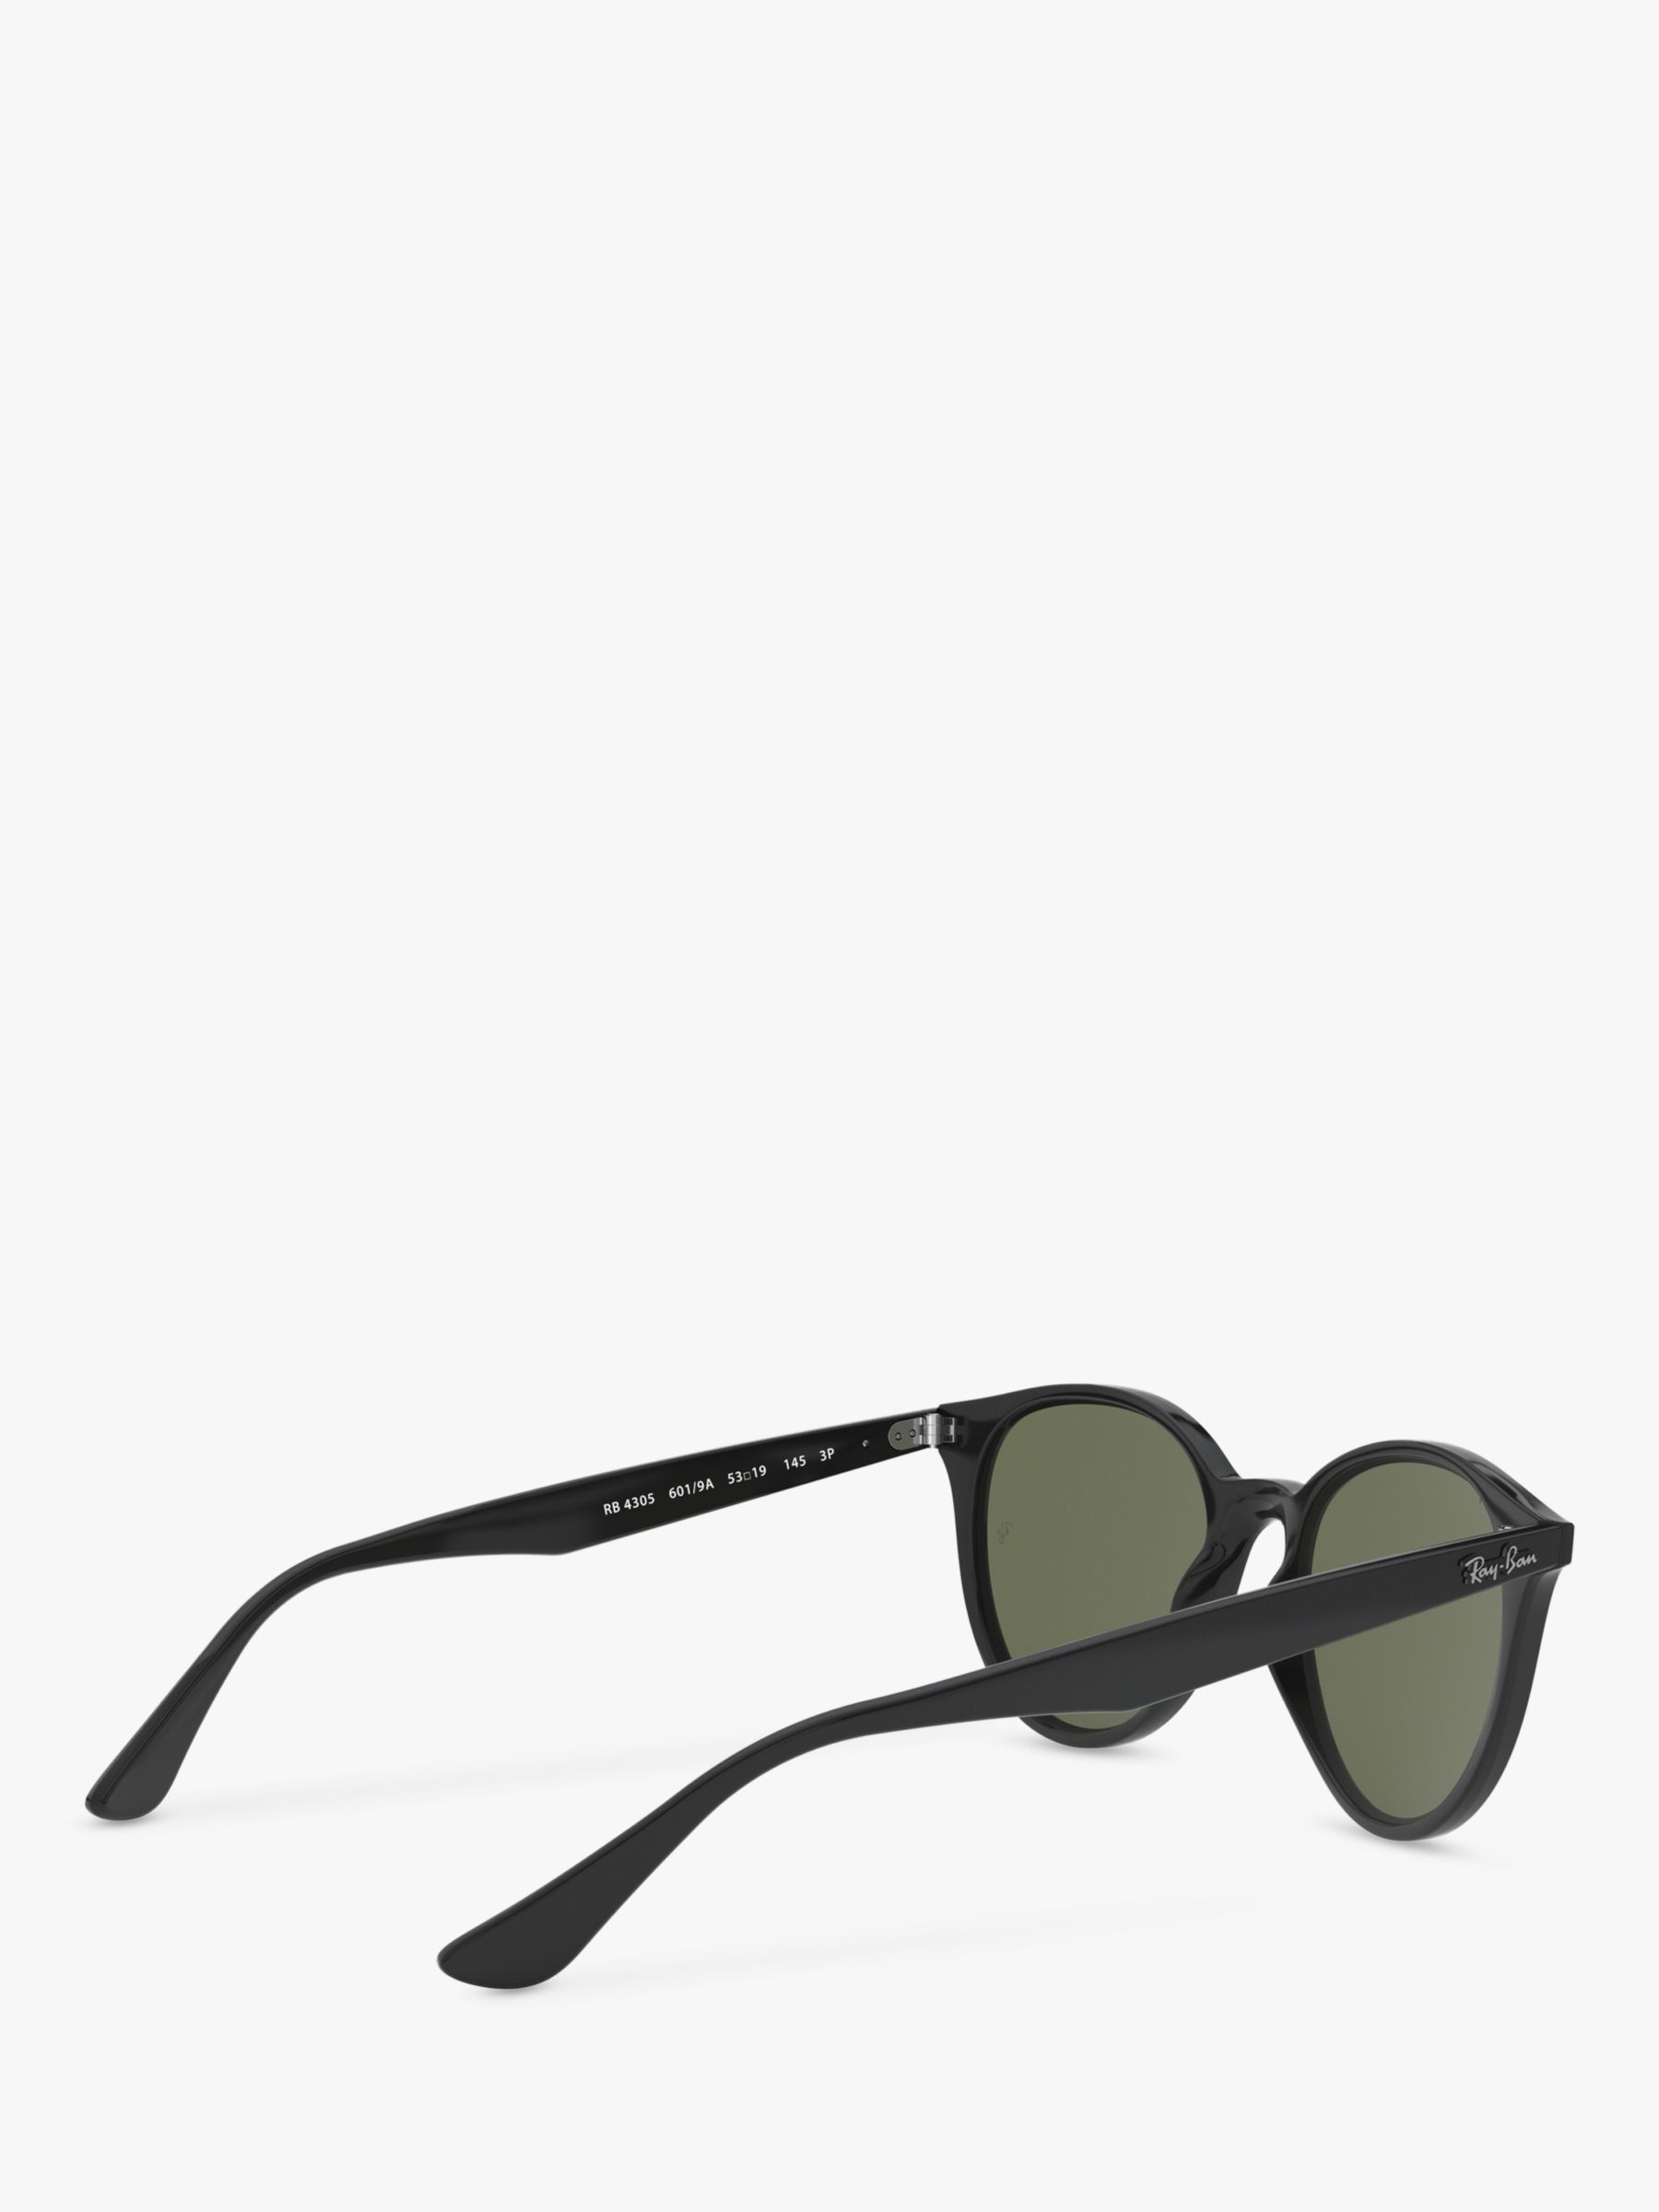 Ray-Ban RB4305 Unisex Polarised Sunglasses, Black/Green